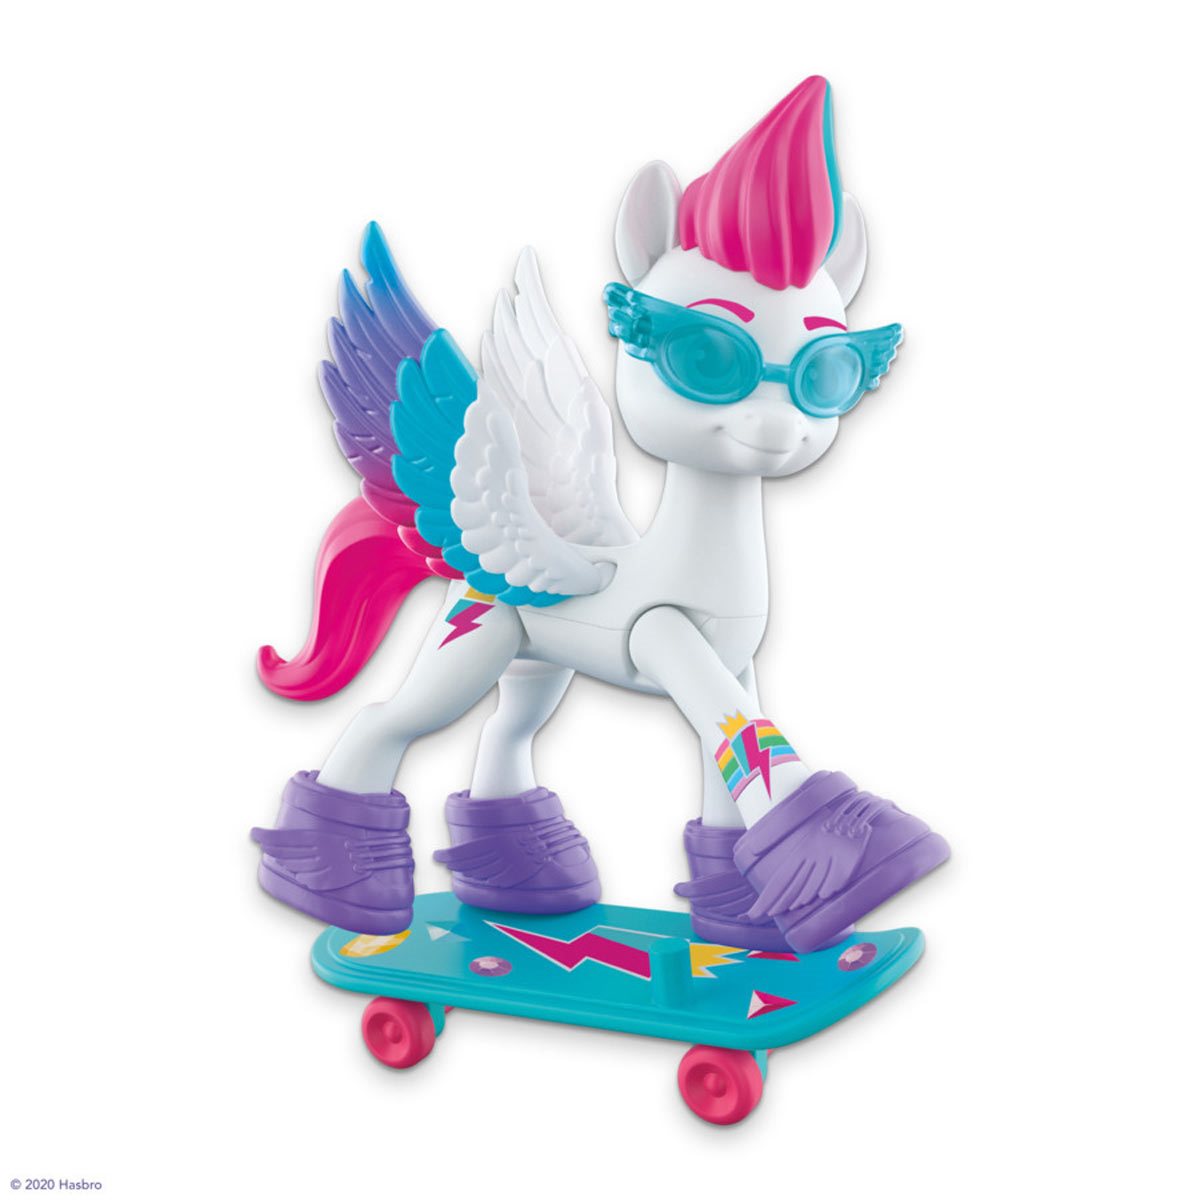 My Little Pony: A New Generation - Zipp Storm Aventura De Cristal